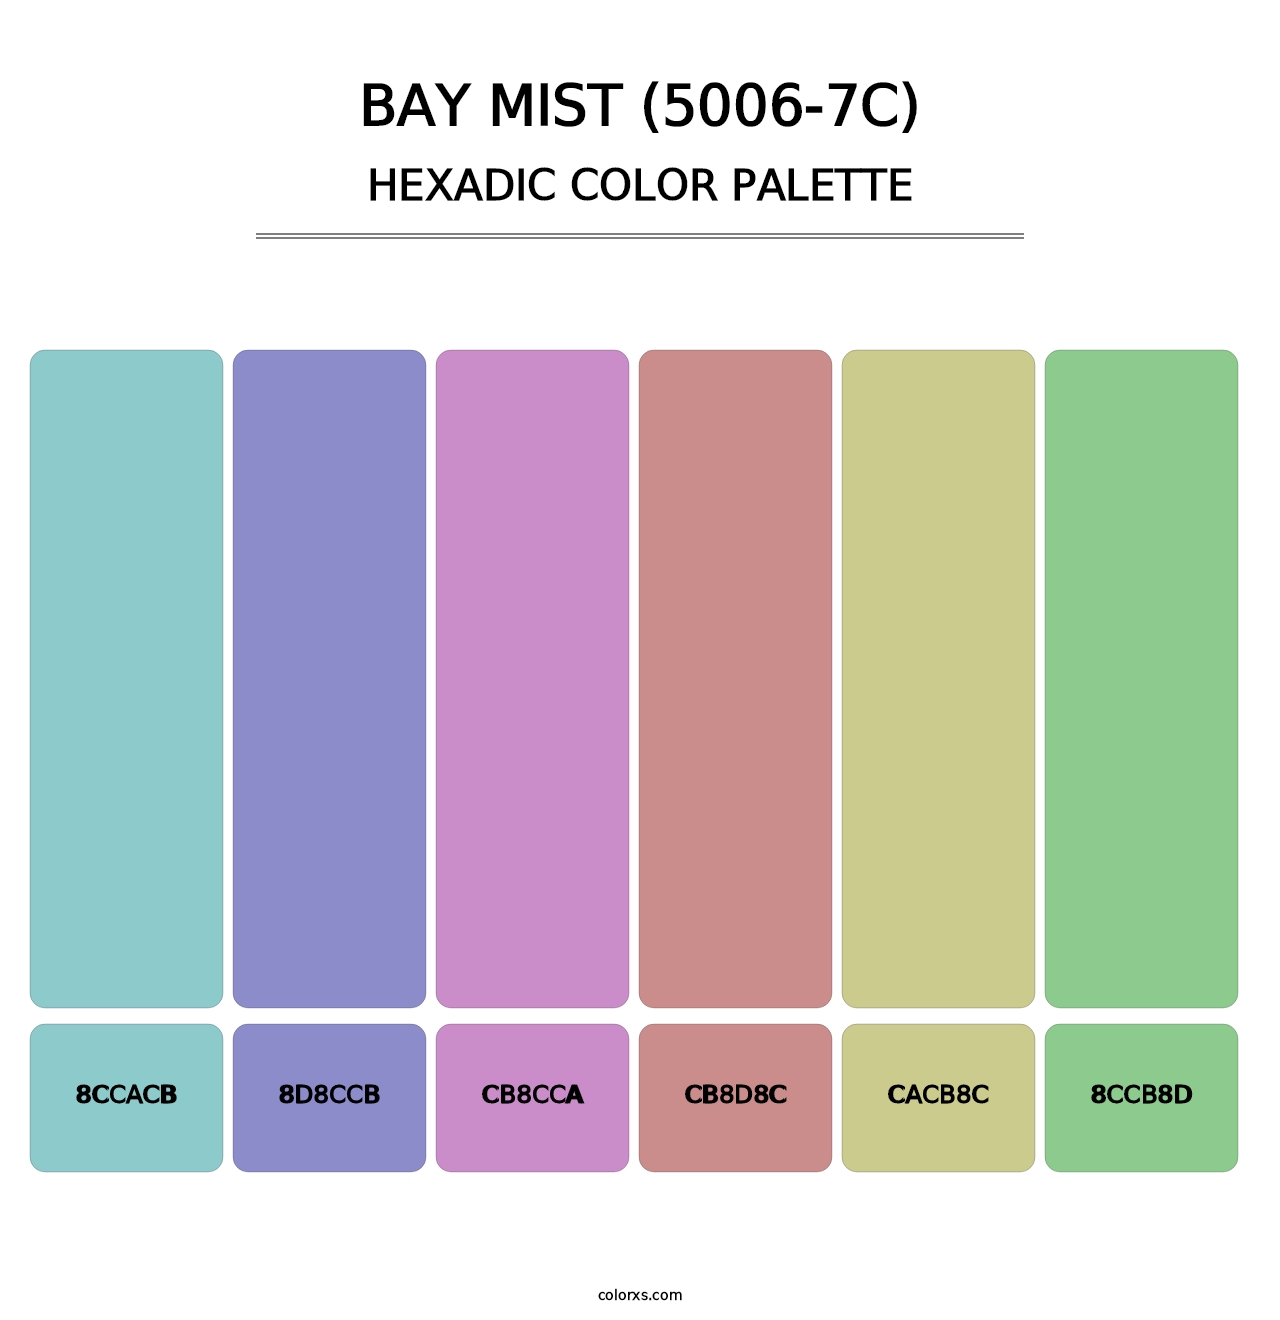 Bay Mist (5006-7C) - Hexadic Color Palette